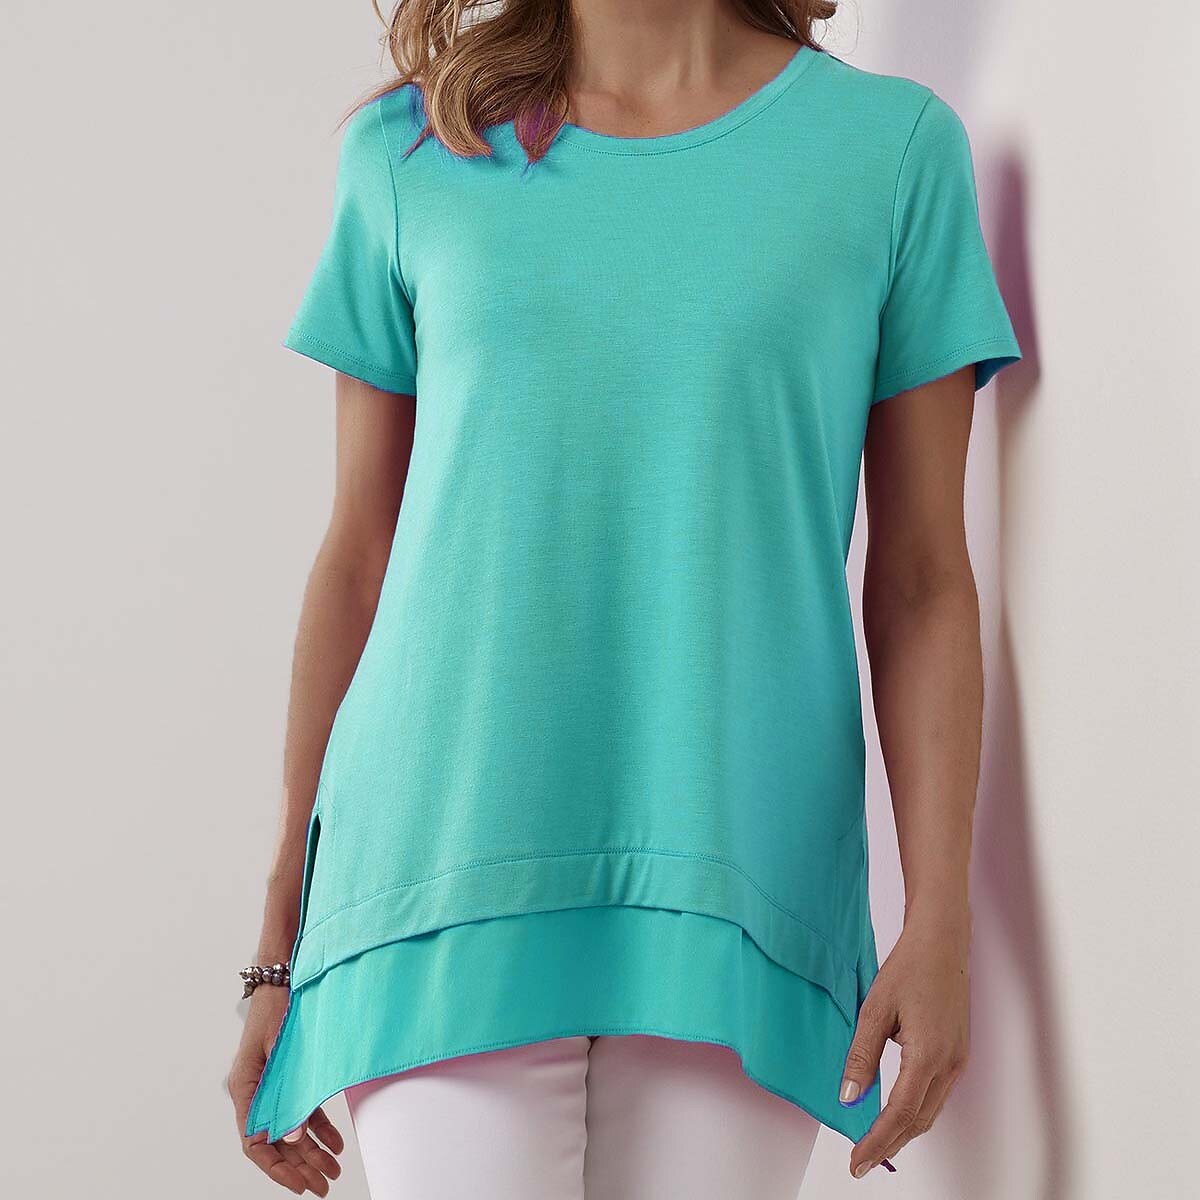 Women's short-sleeved t-shirt loose round neck bottoming shirt